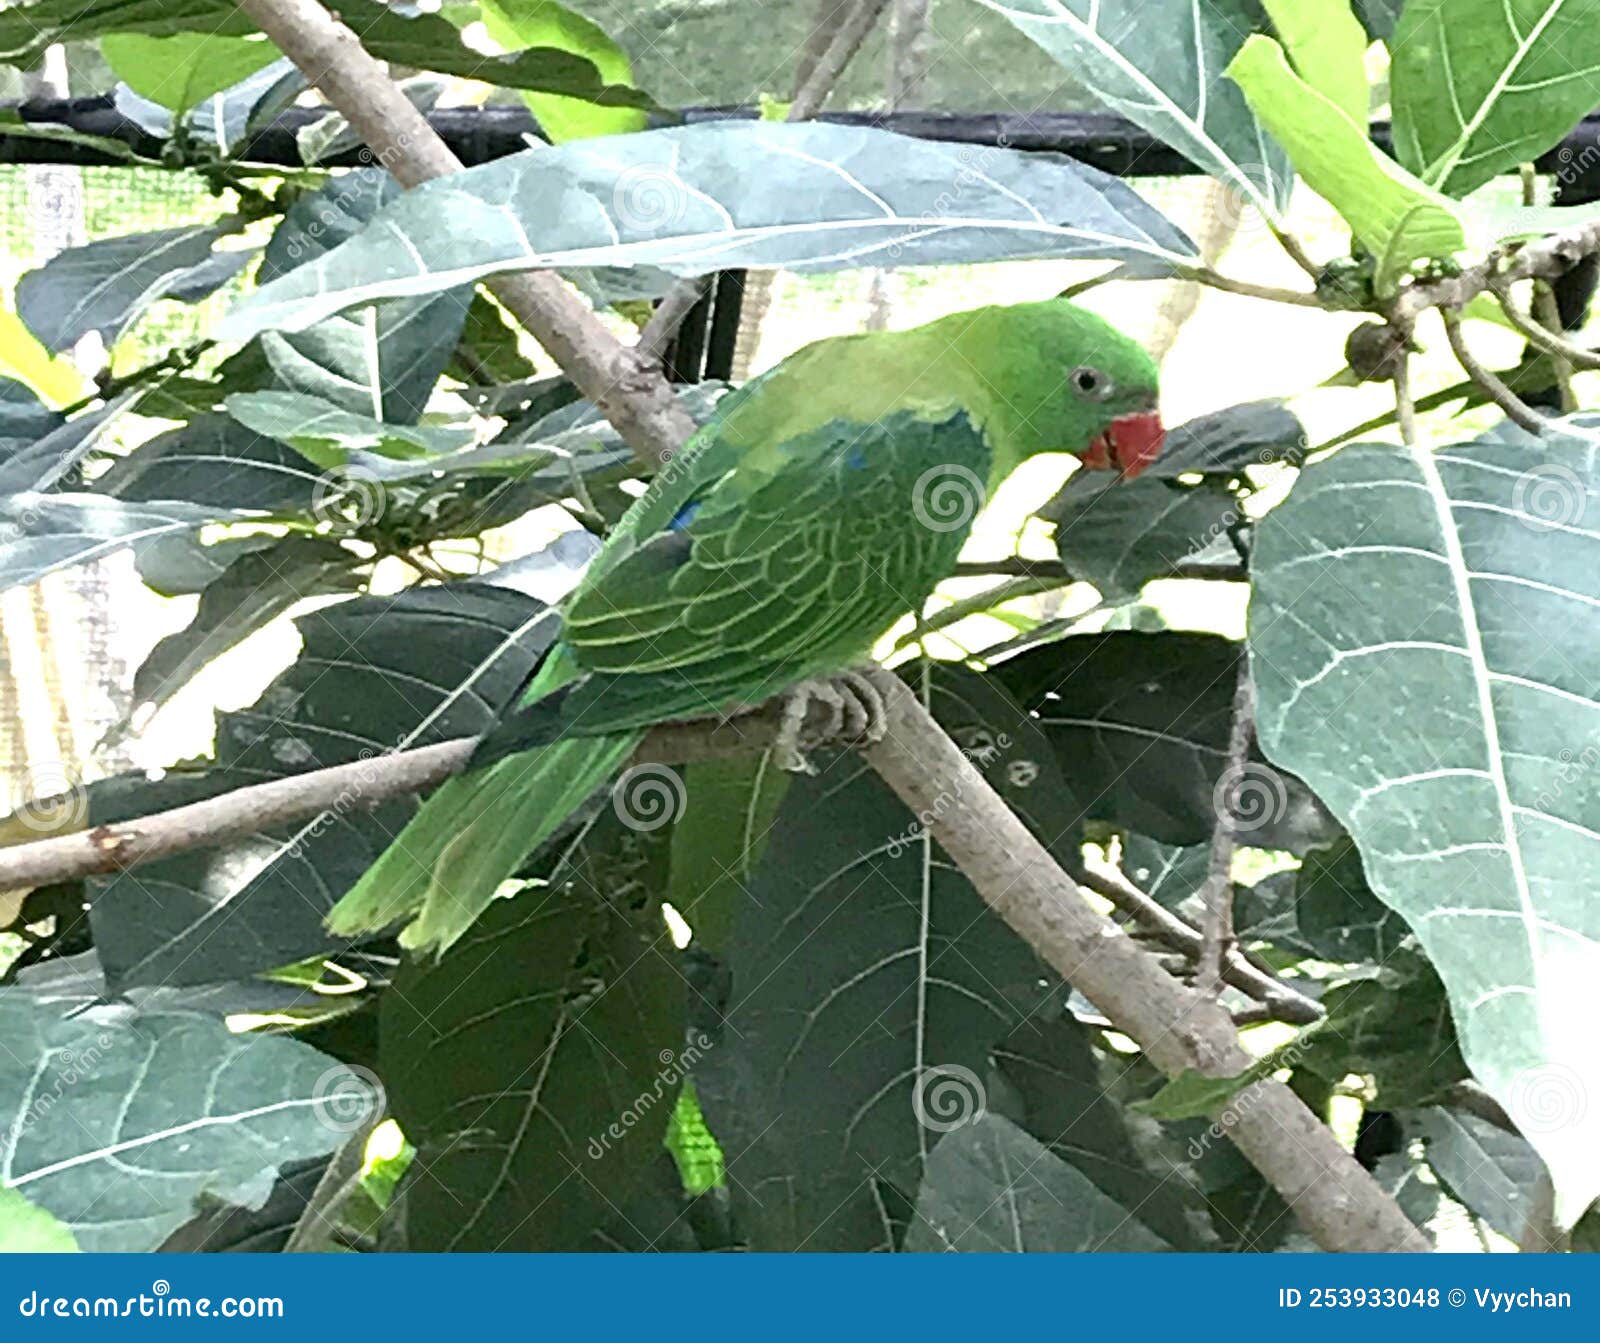 indonesia sanur bali bird park tropical birds colorful birds endangered parrot macaw birdwatching birdwatch chilling feather